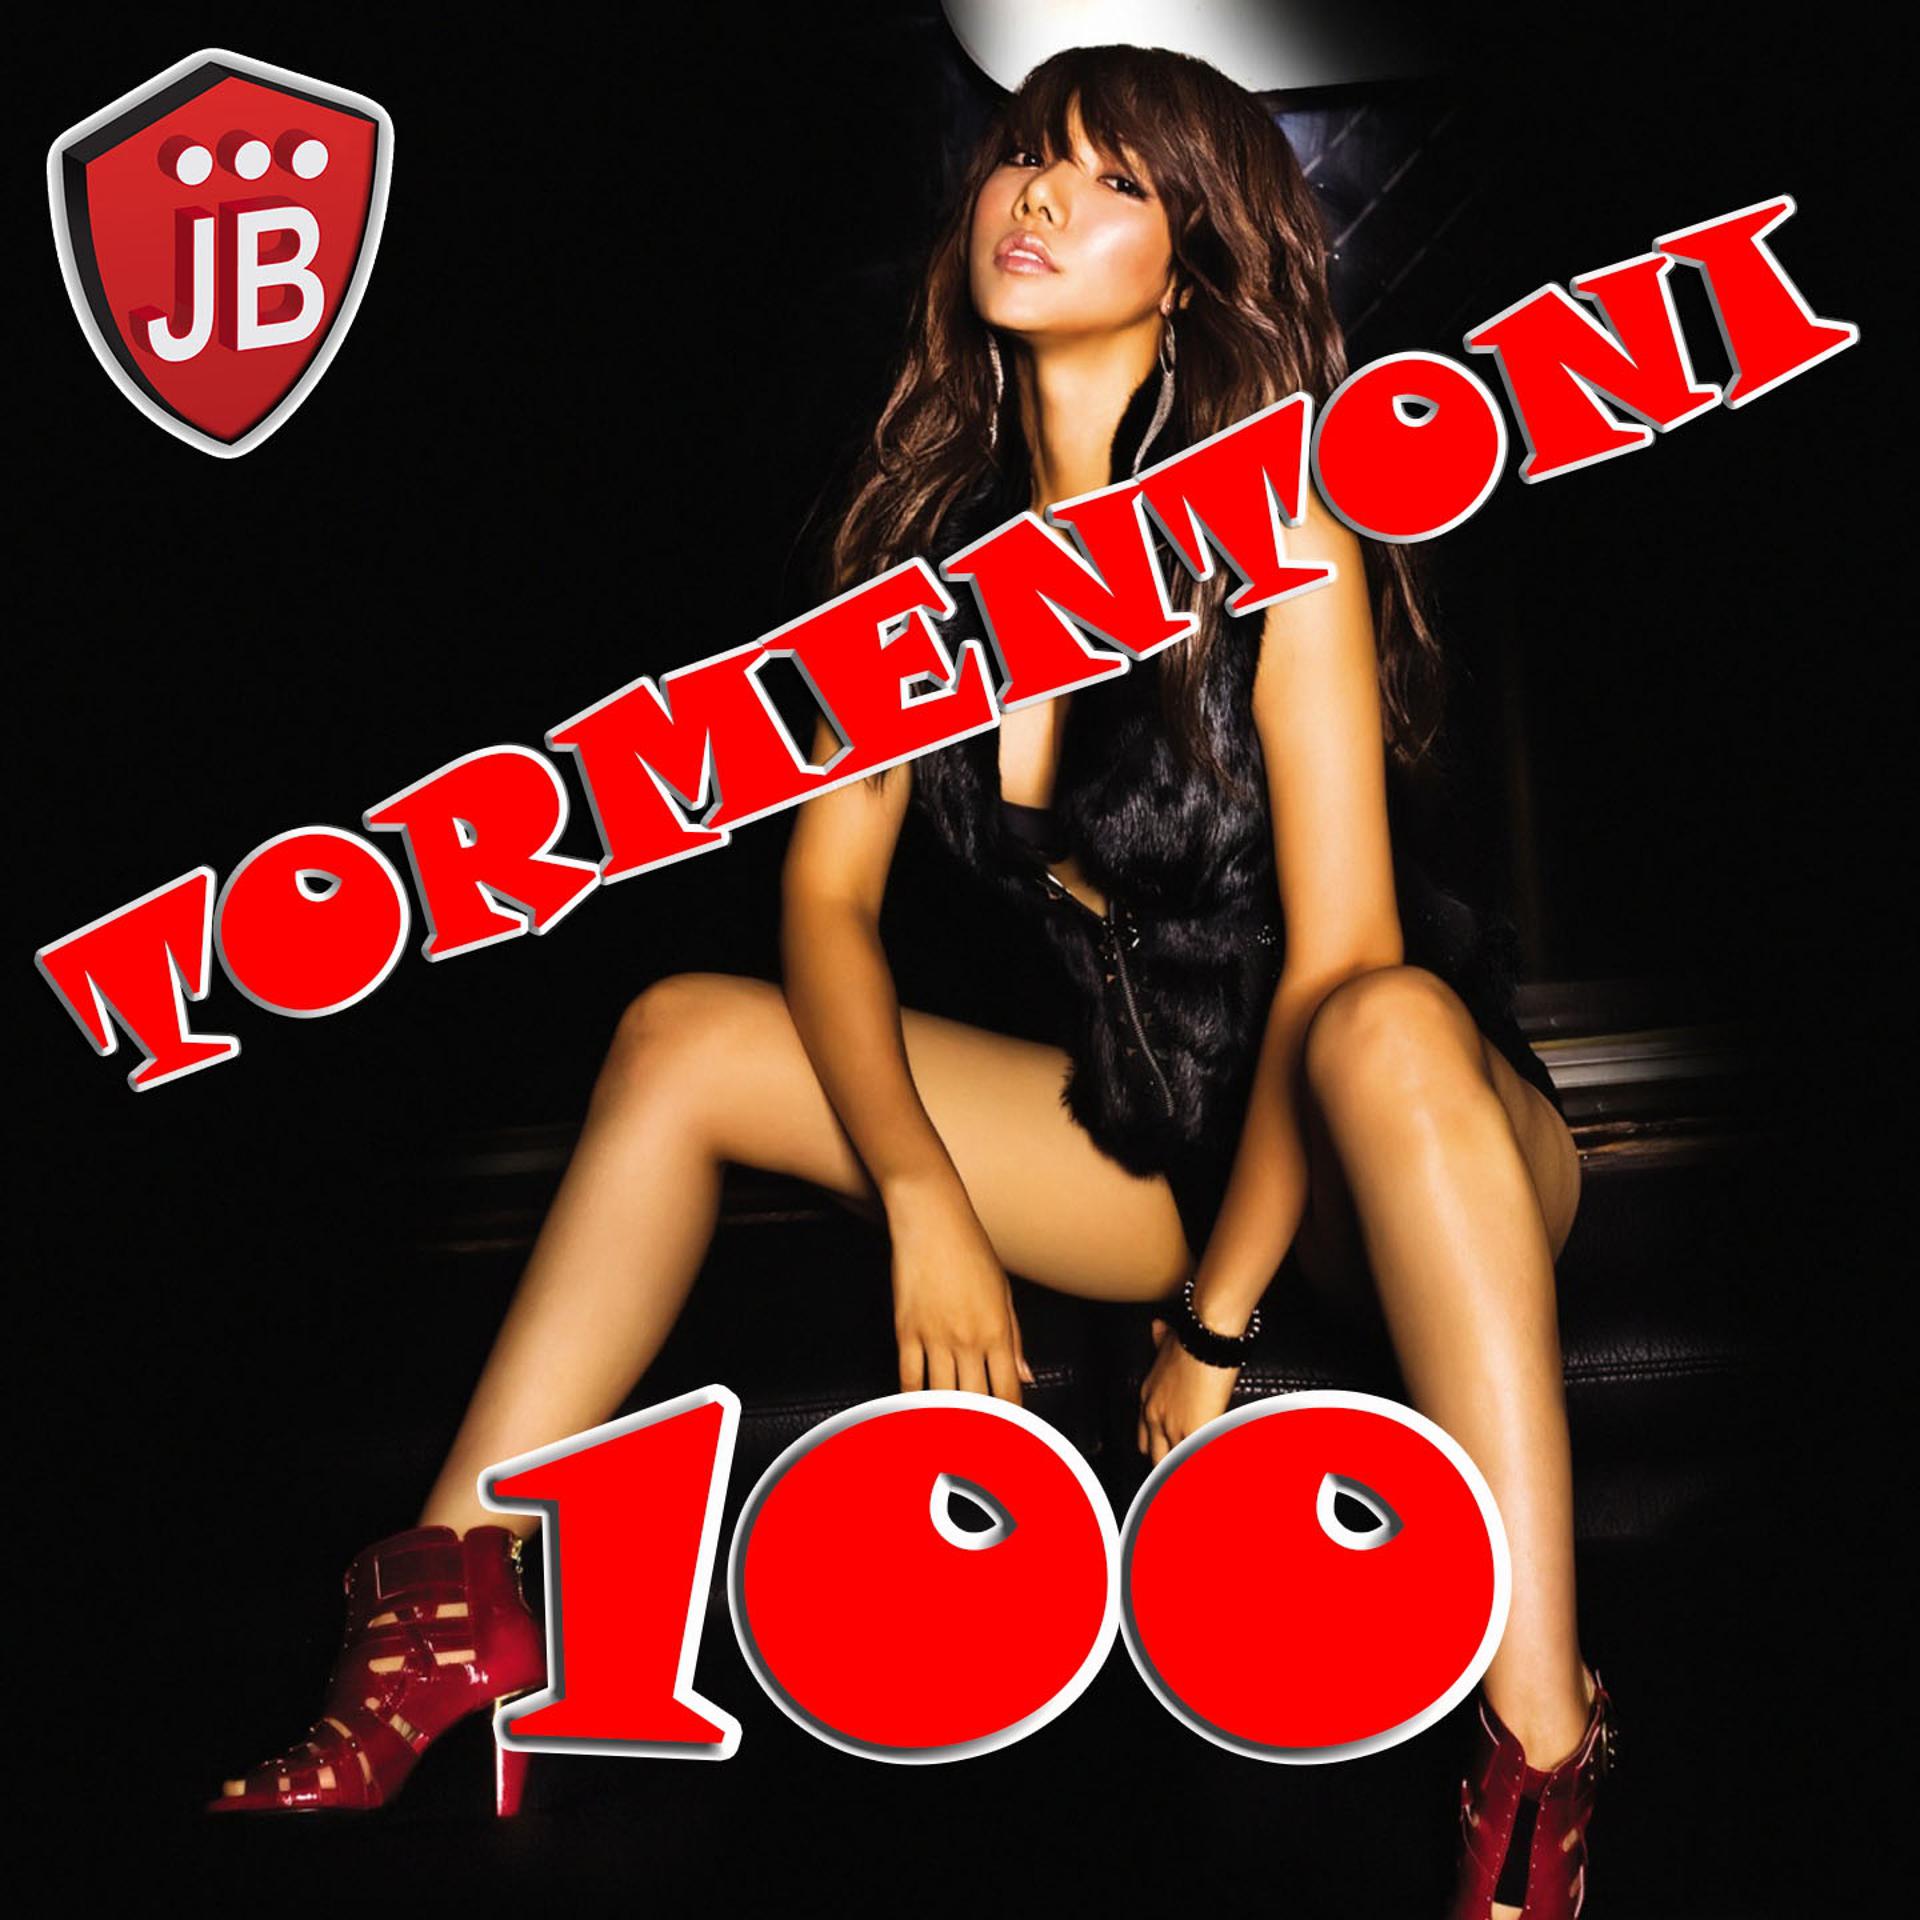 Постер альбома 100 tormentoni